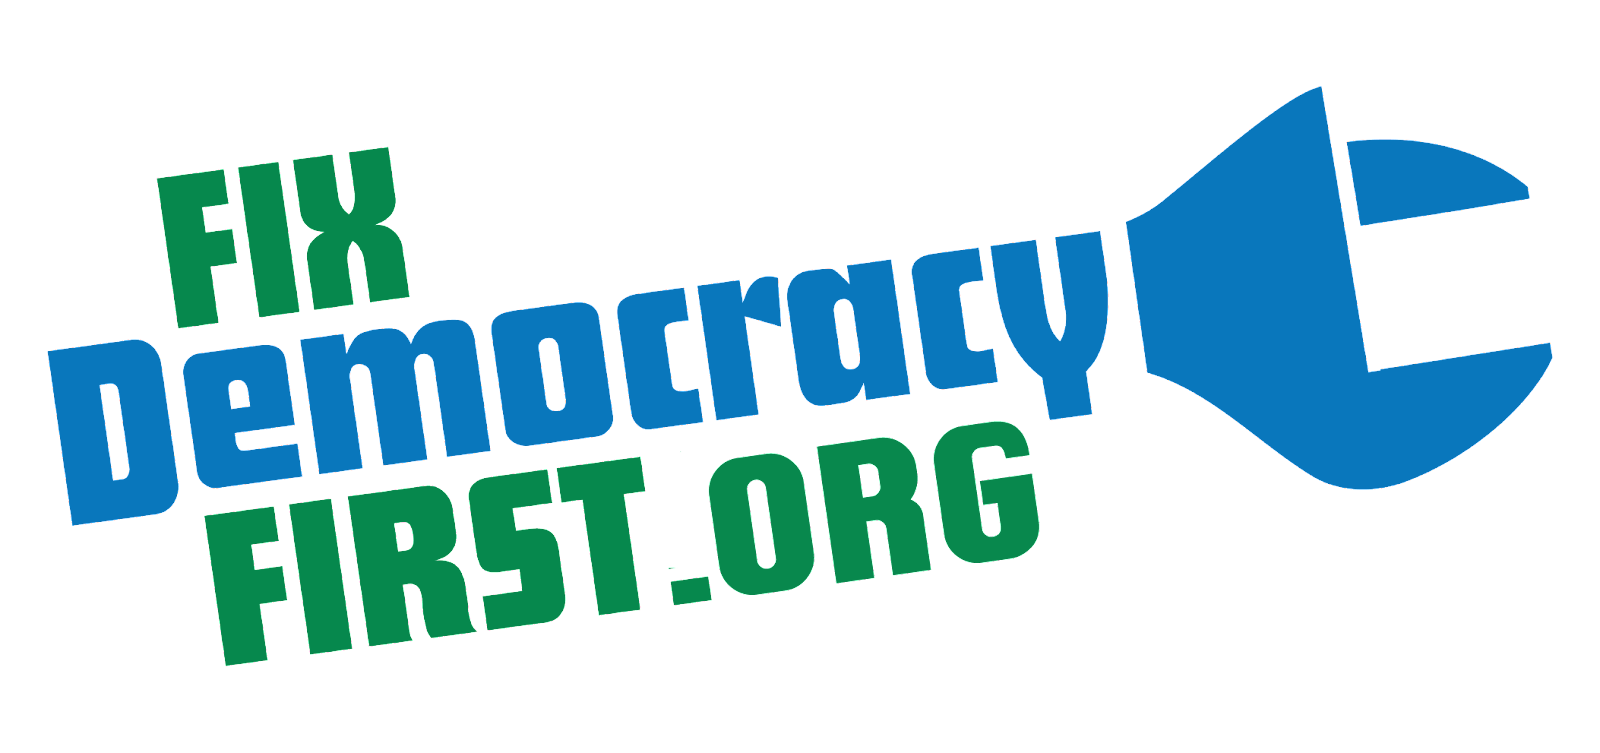 Fix Democracy First